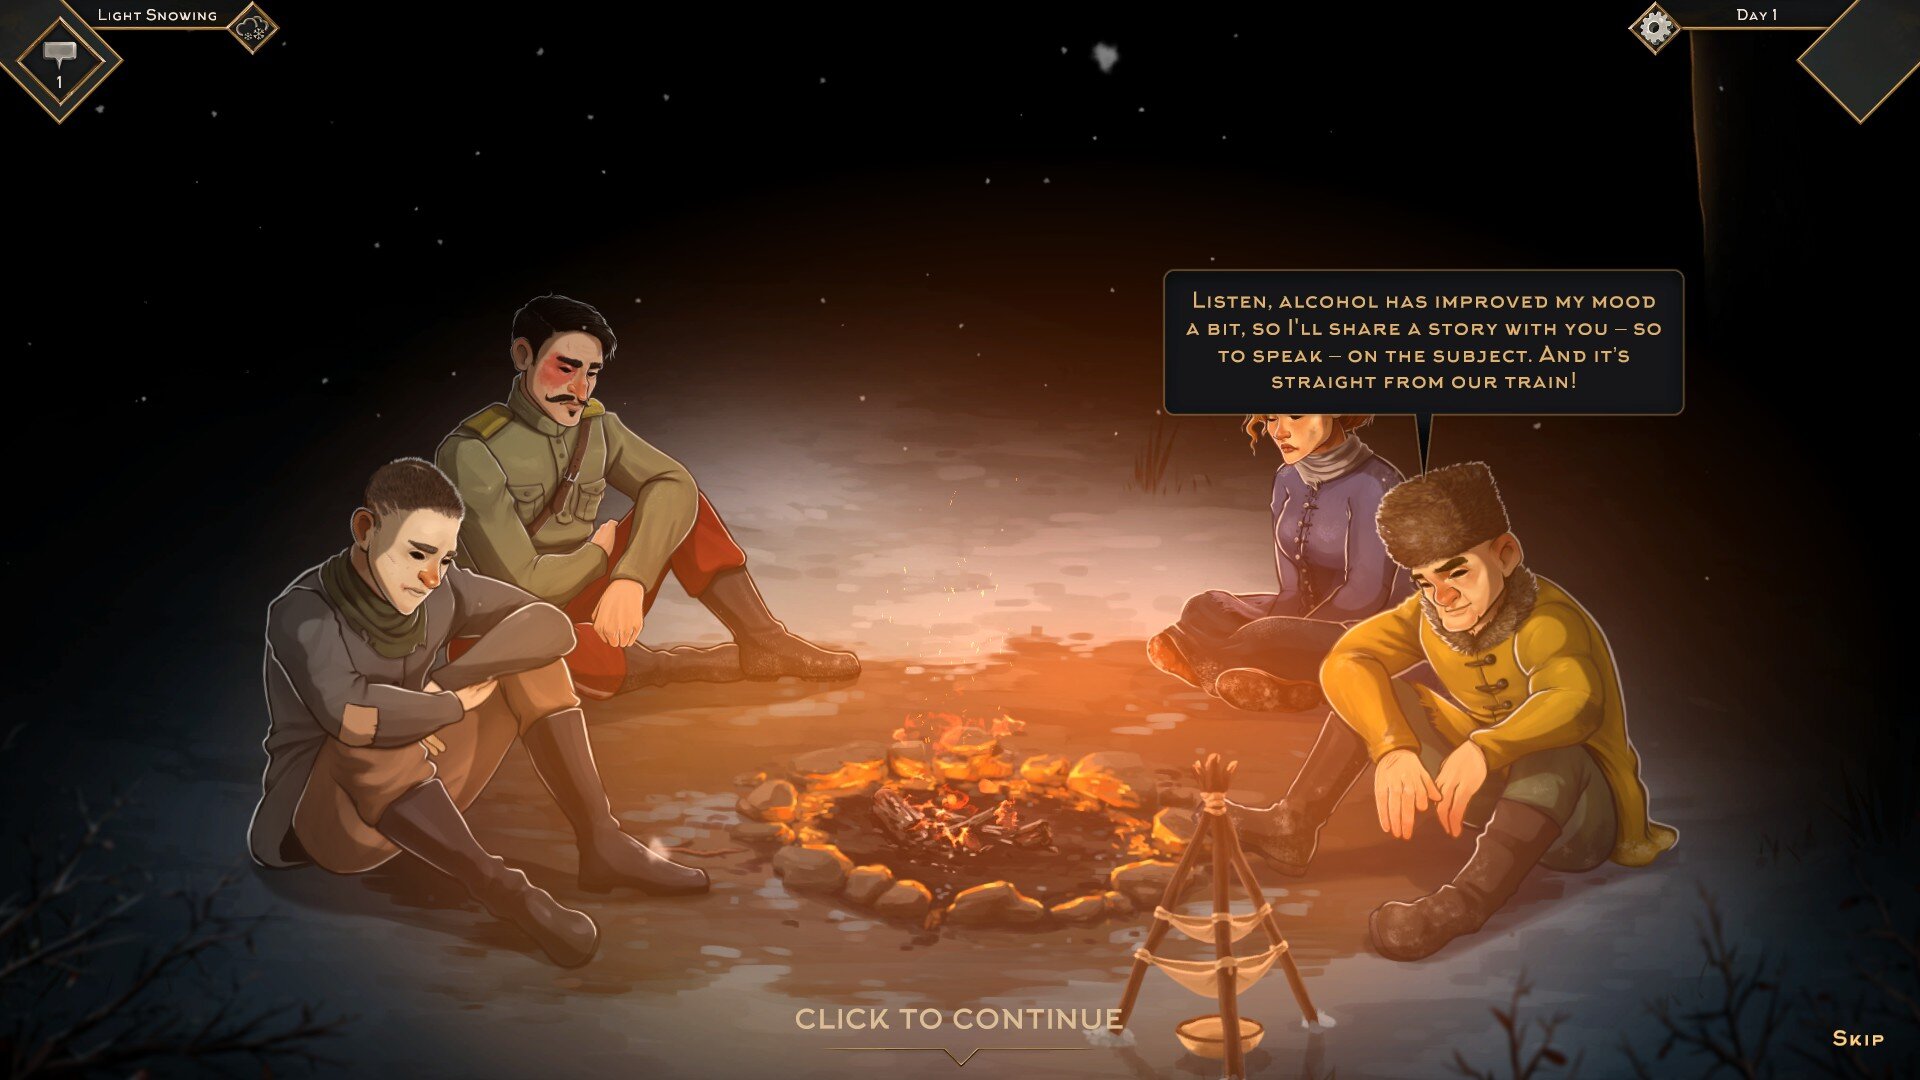 Help Will Come Tomorrow game screenshot, night conversation